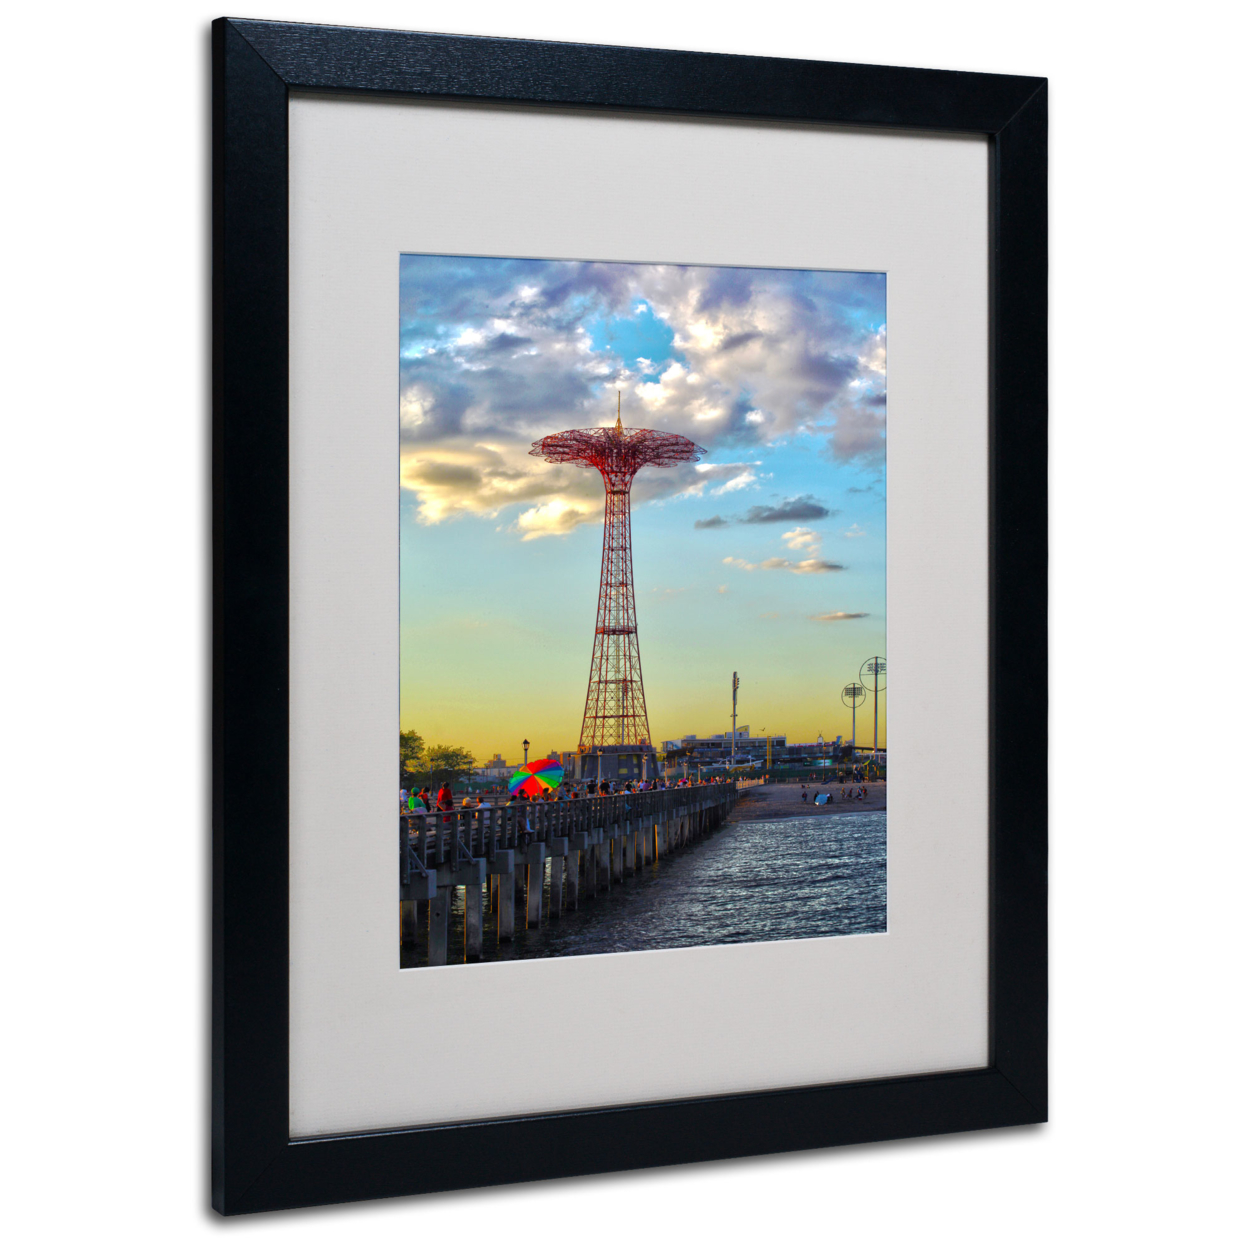 CATeyes 'Coney Island' Black Wooden Framed Art 18 X 22 Inches